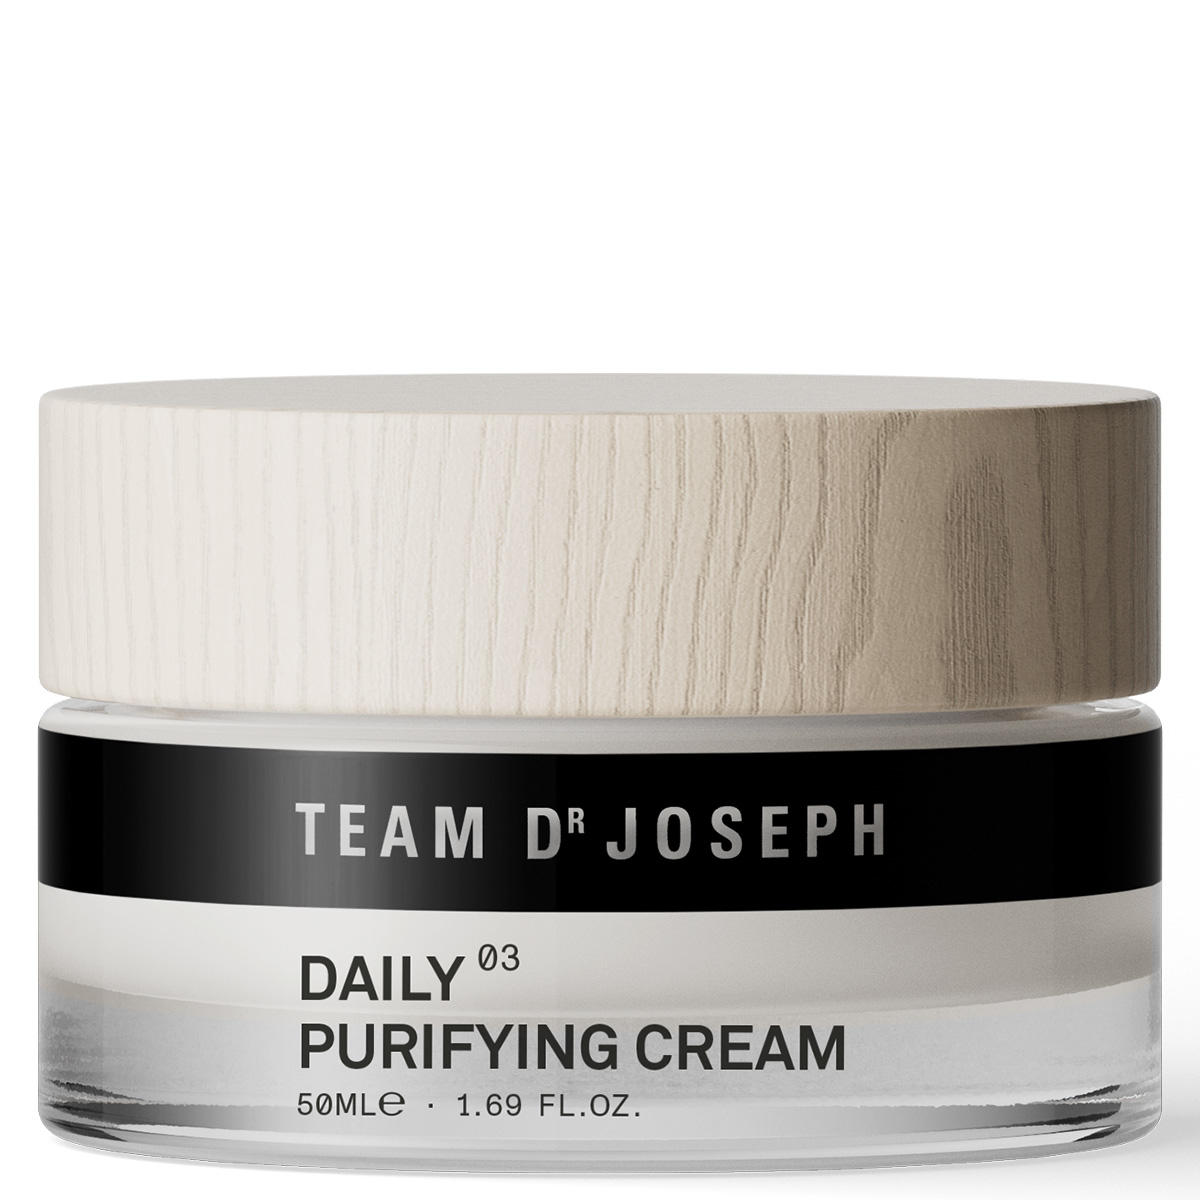 TEAM DR JOSEPH Daily Purifying Cream 50 ml